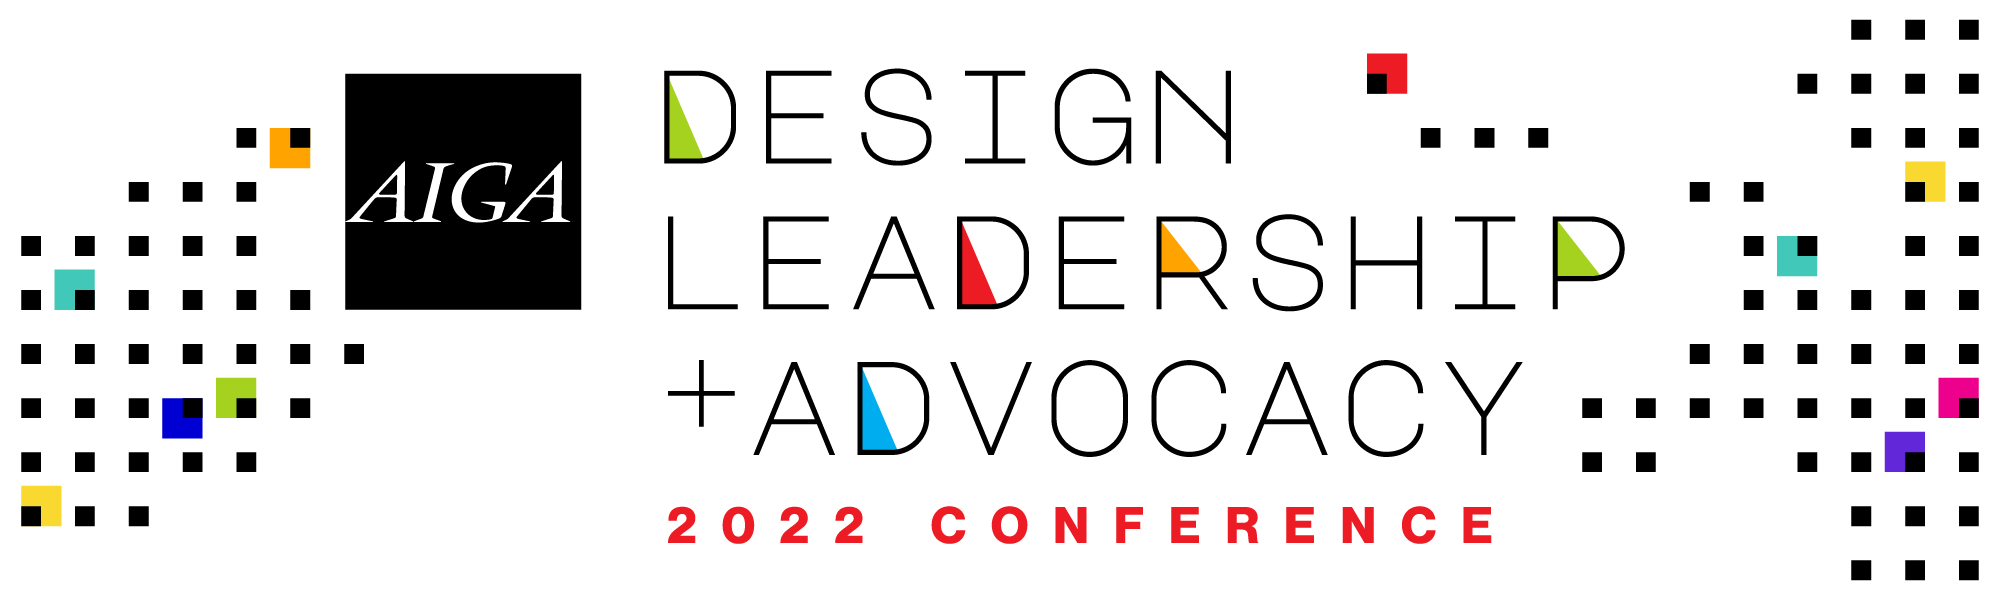 2022 AIGA Design Leadership + Advocacy